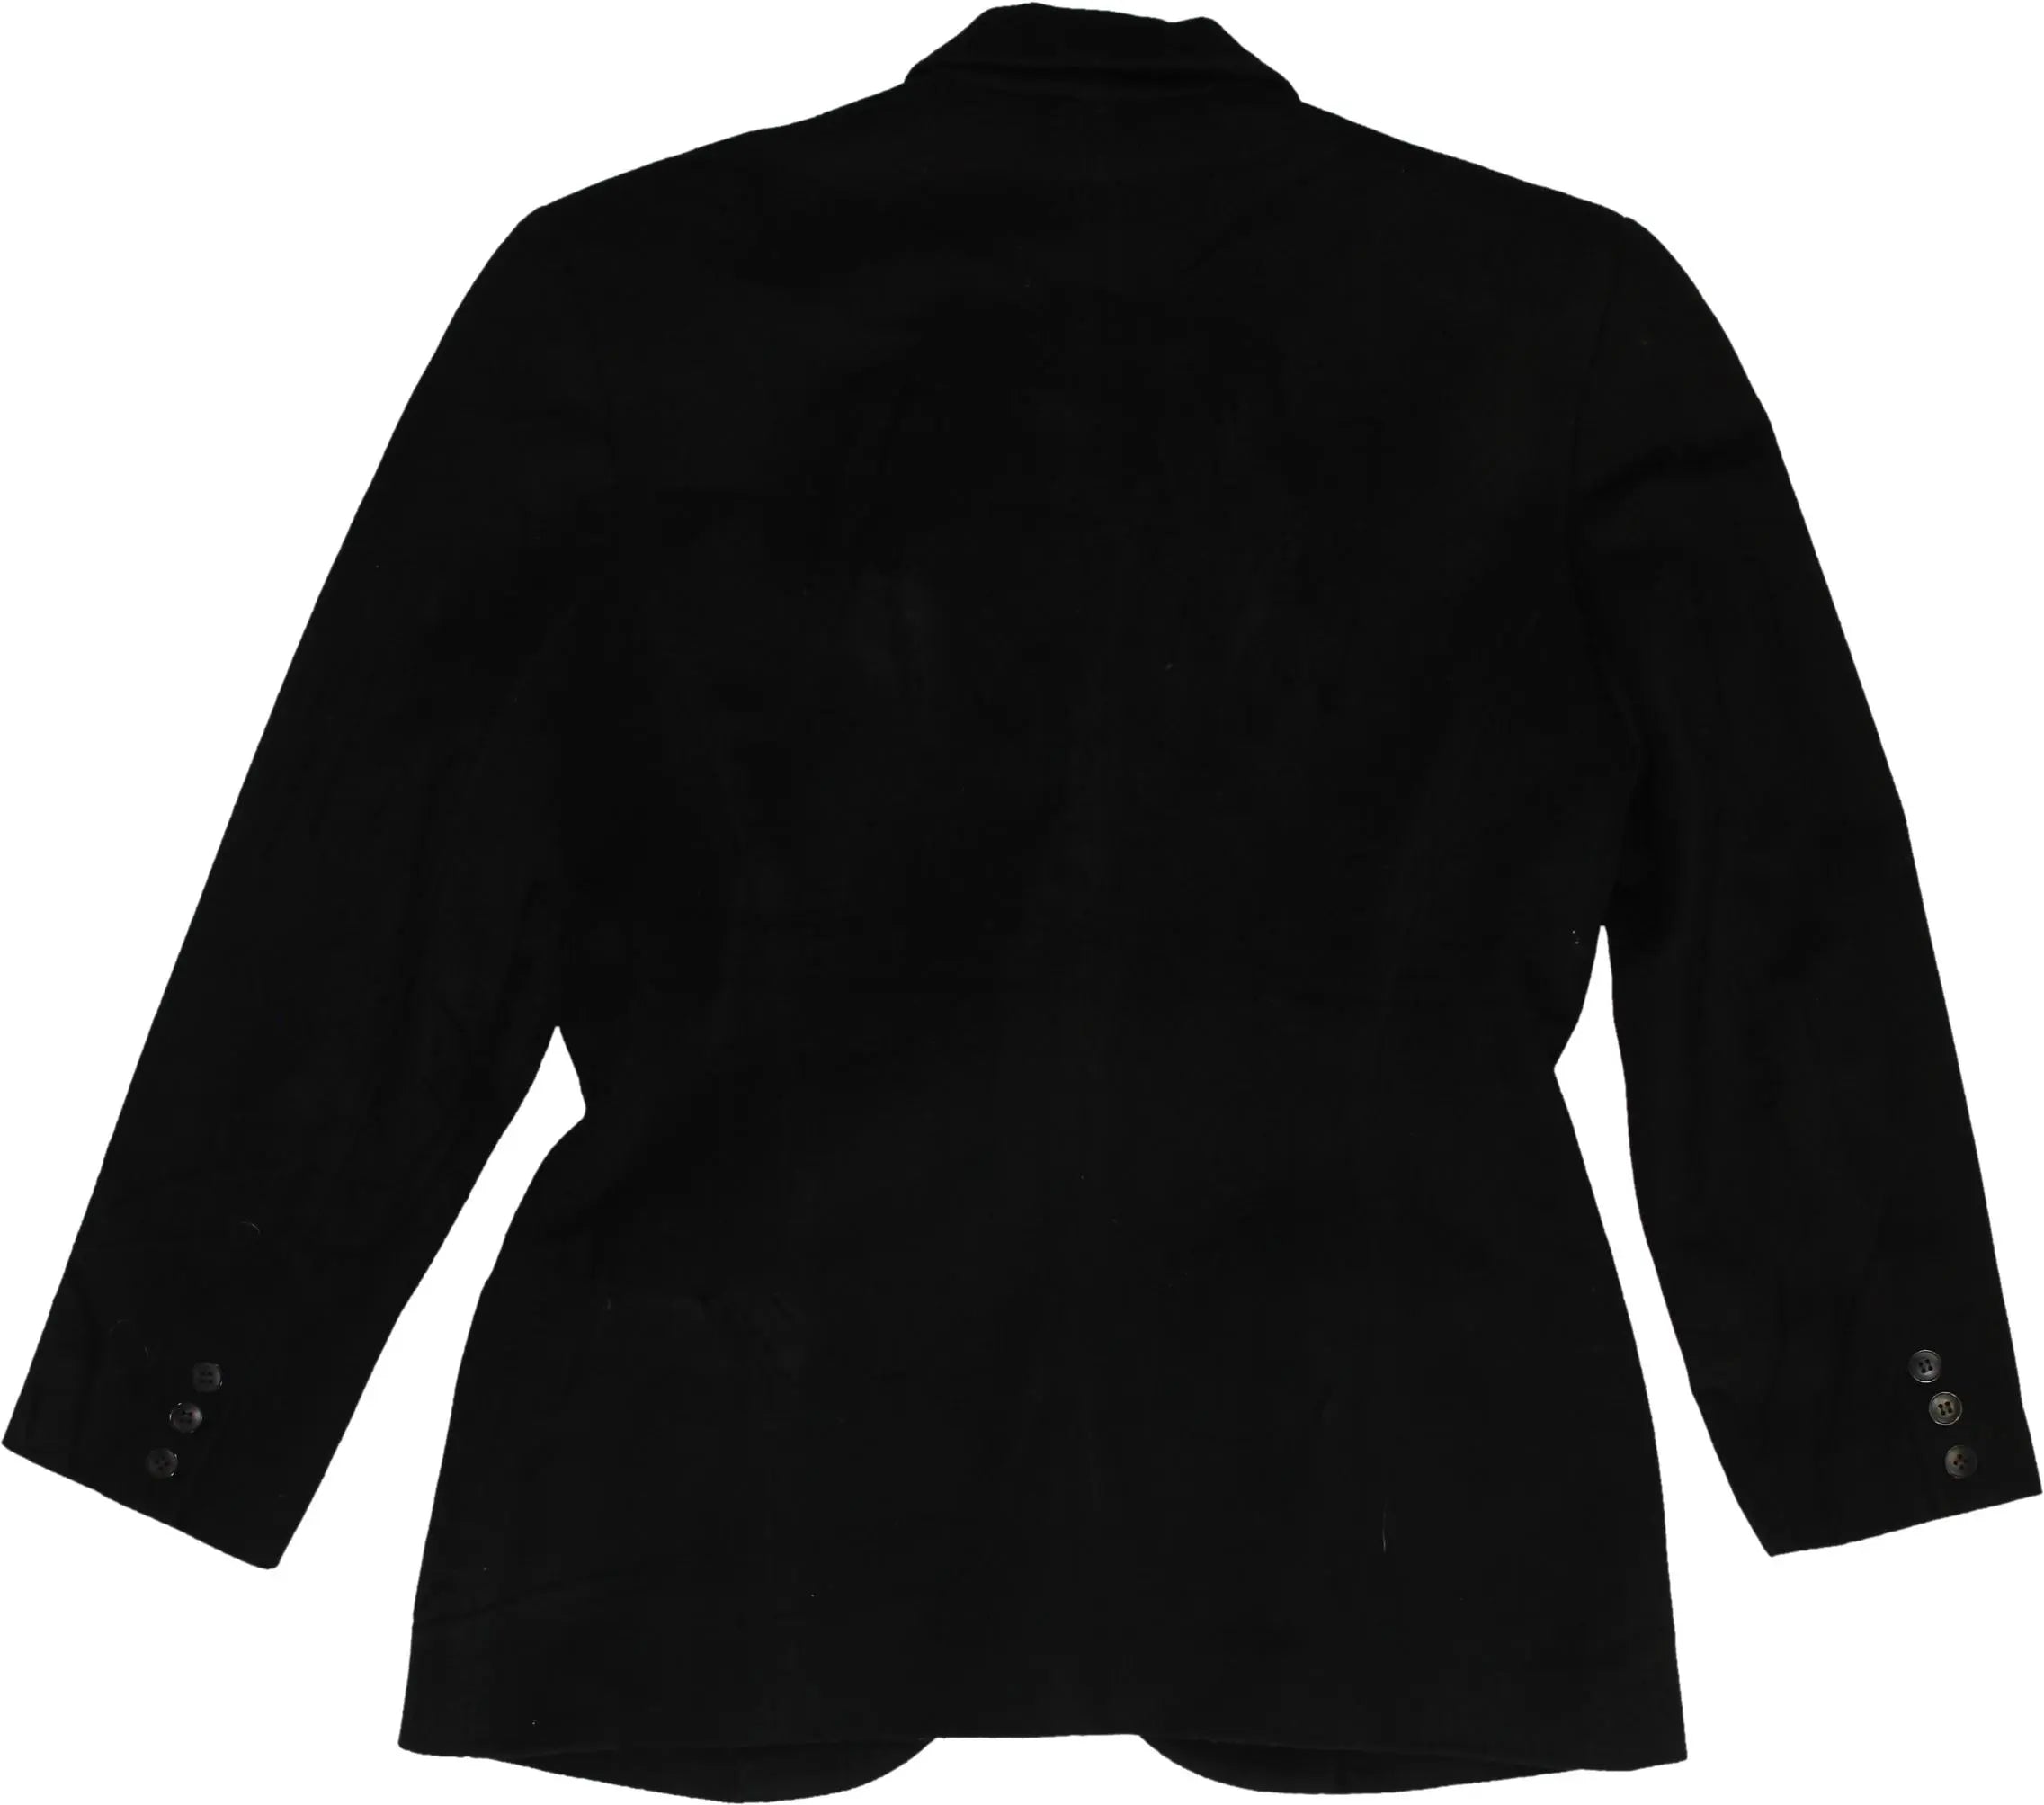 Electre - Black blazer- ThriftTale.com - Vintage and second handclothing